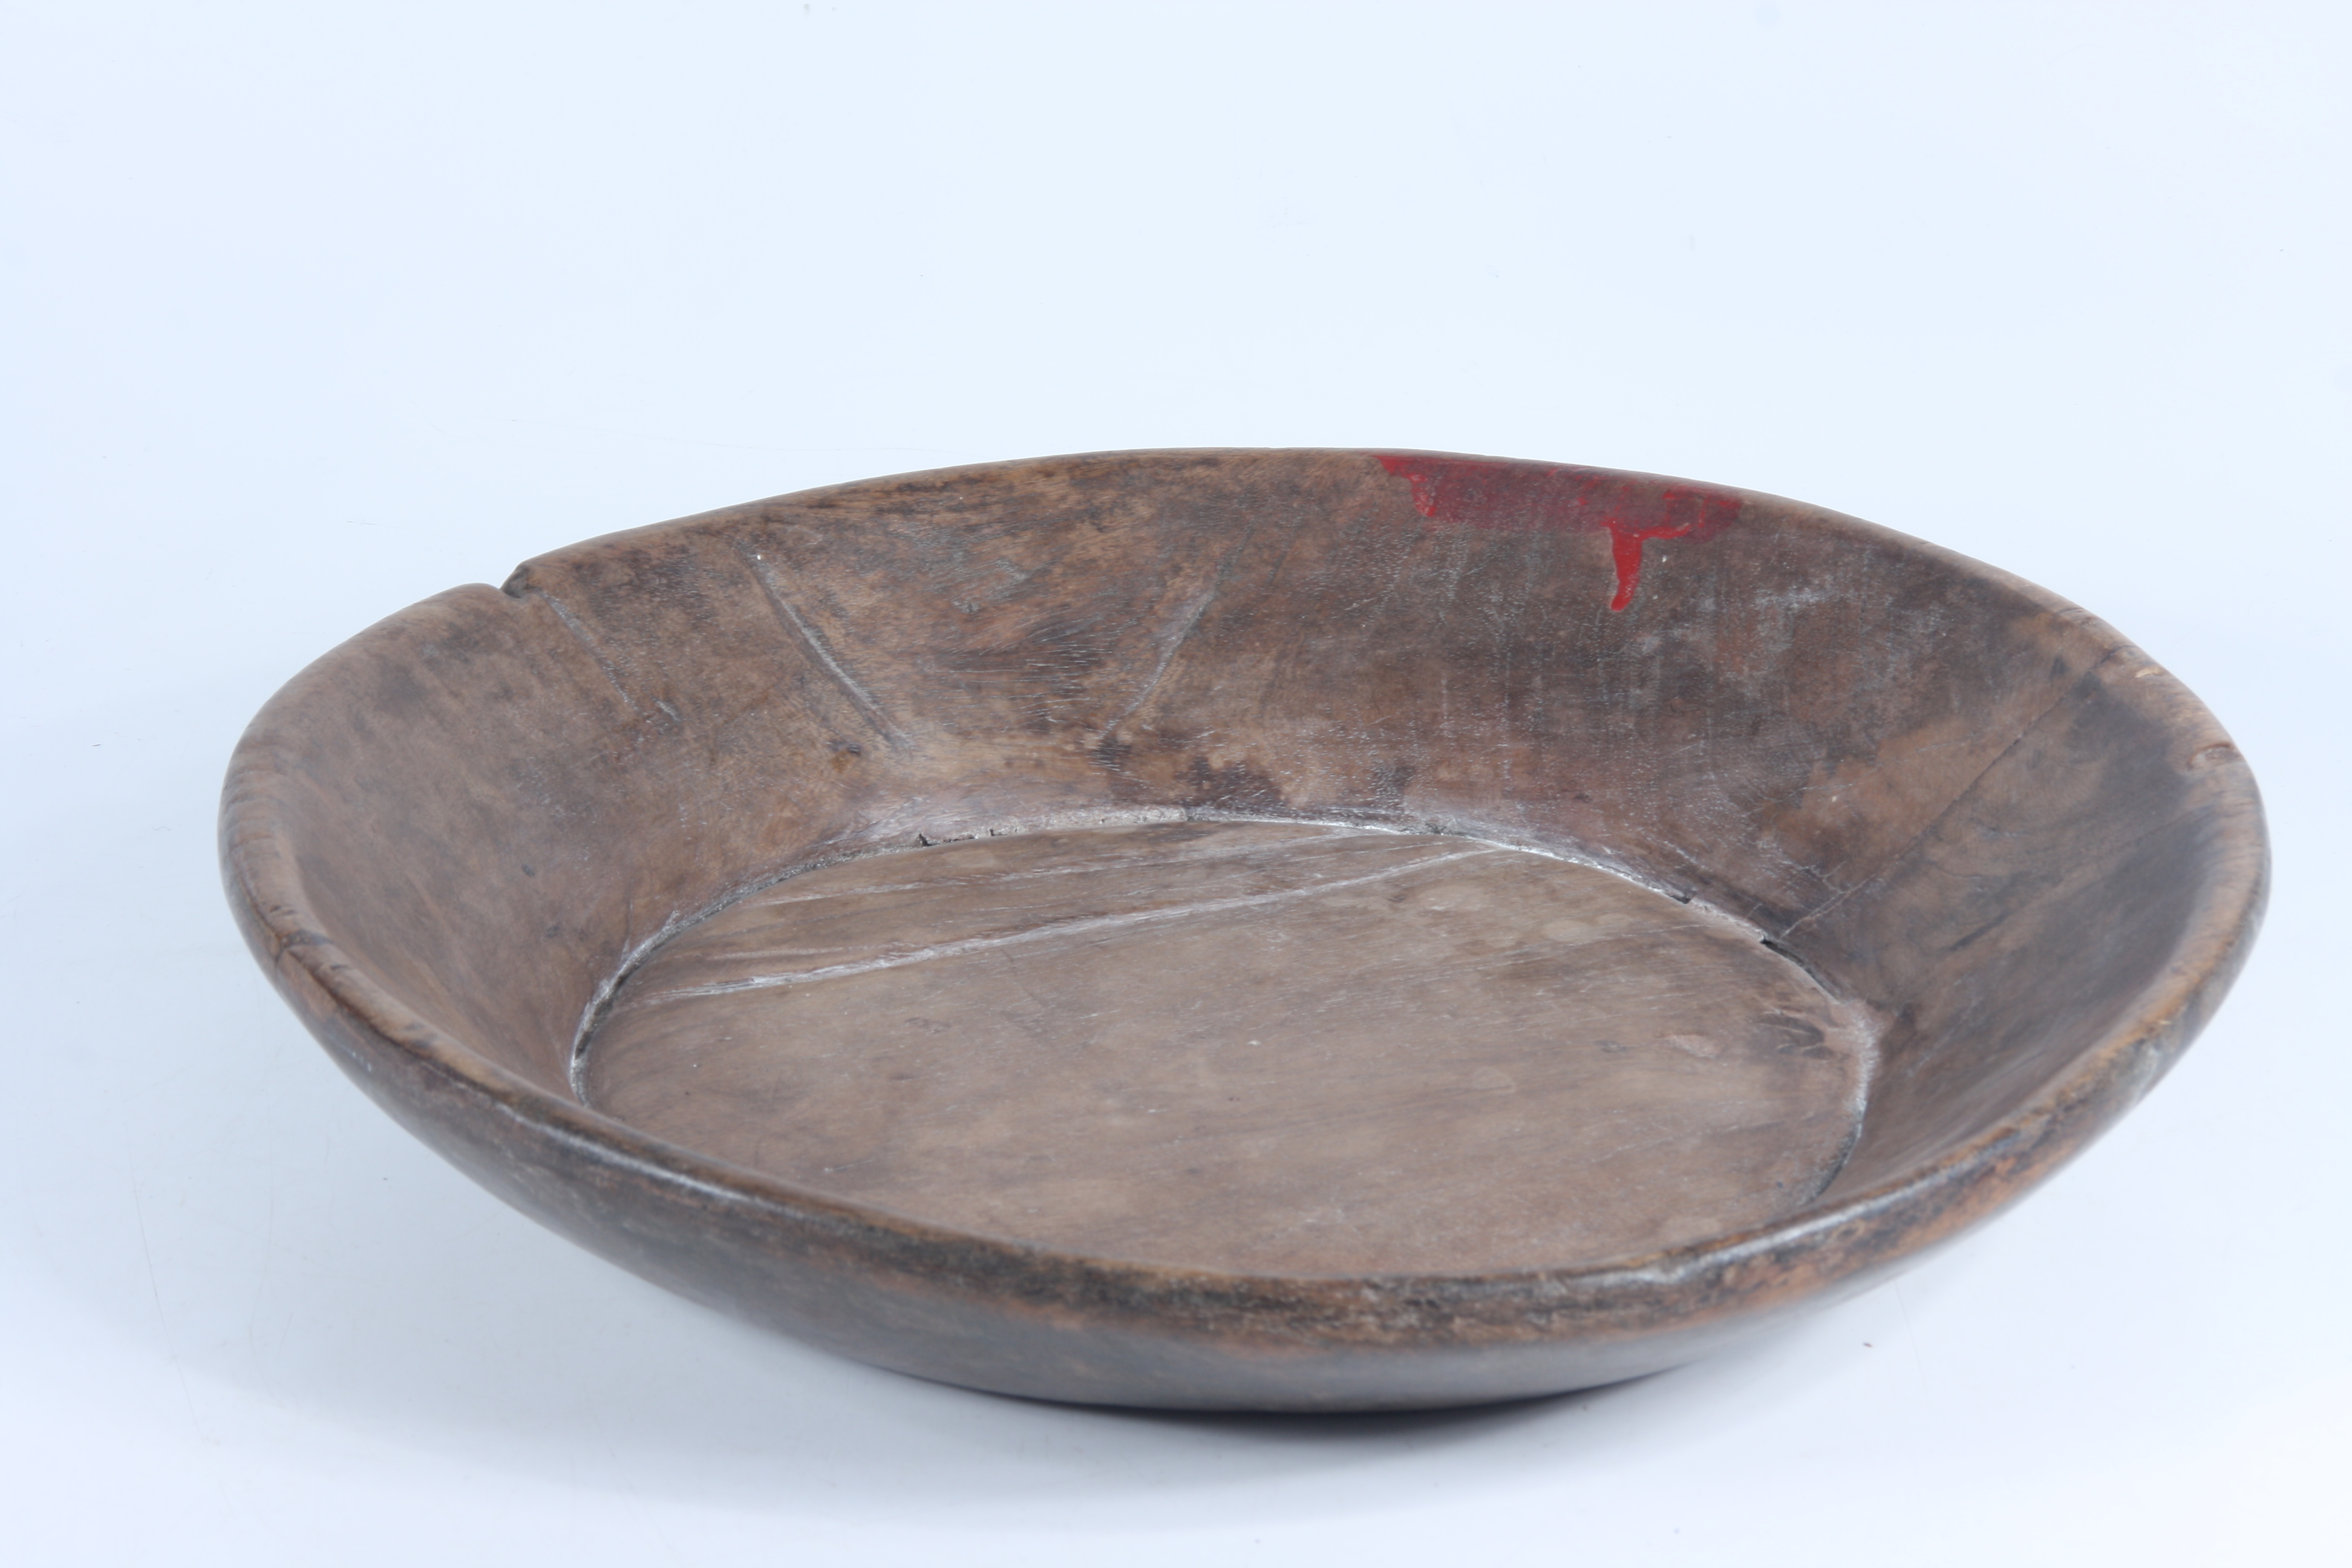 A wooden bowl, diameter 39cm.